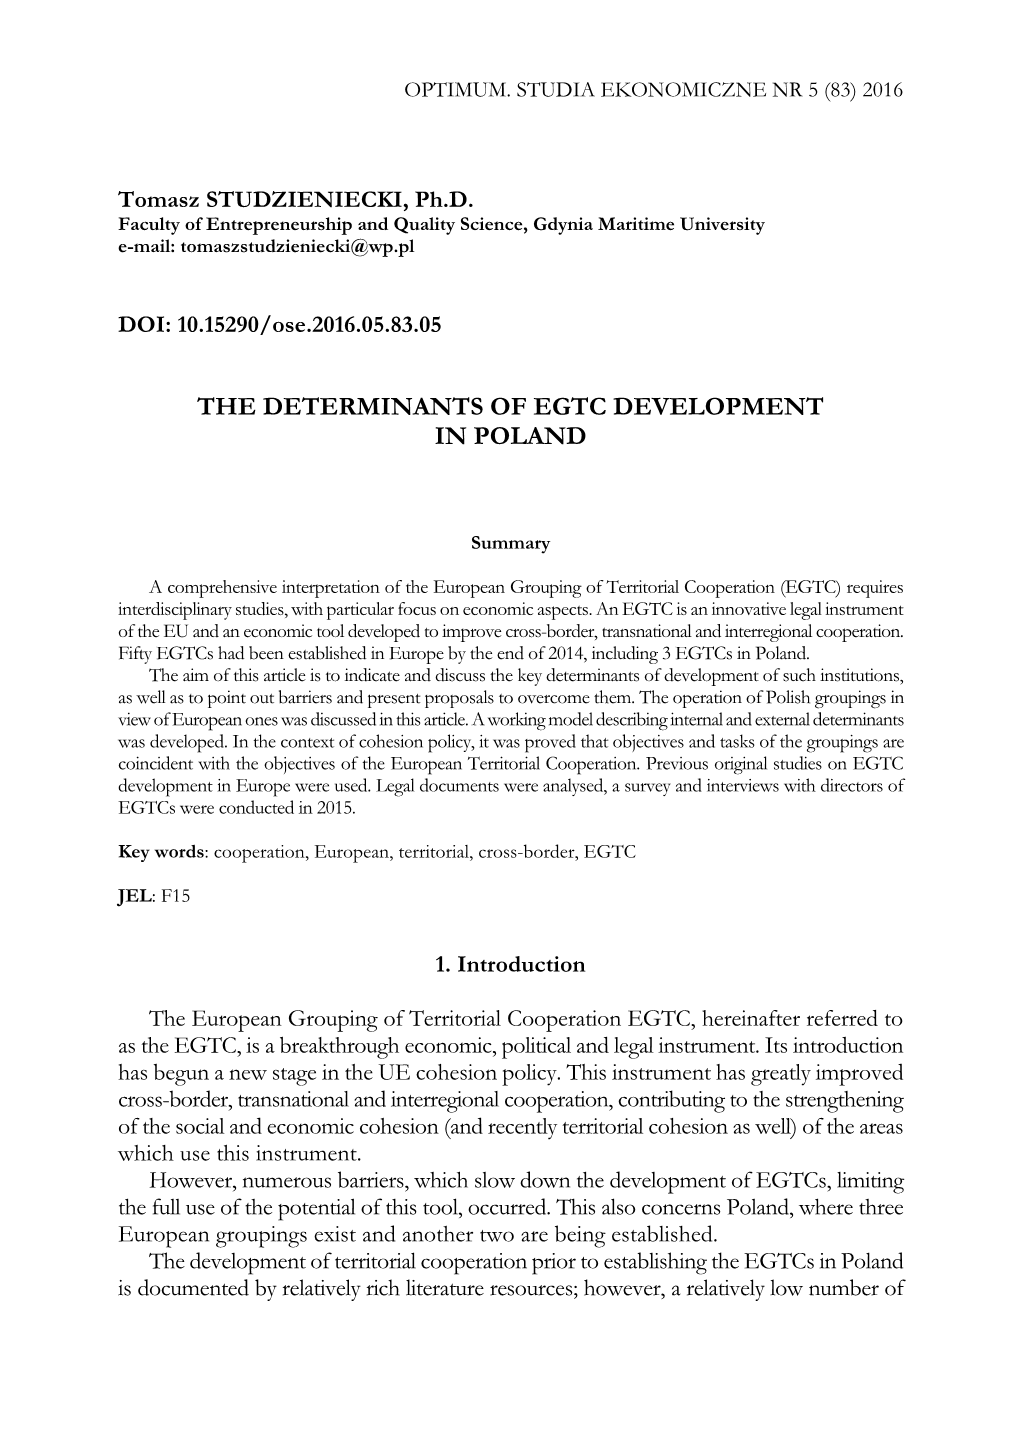 The Determinants of Egtc Development in Poland